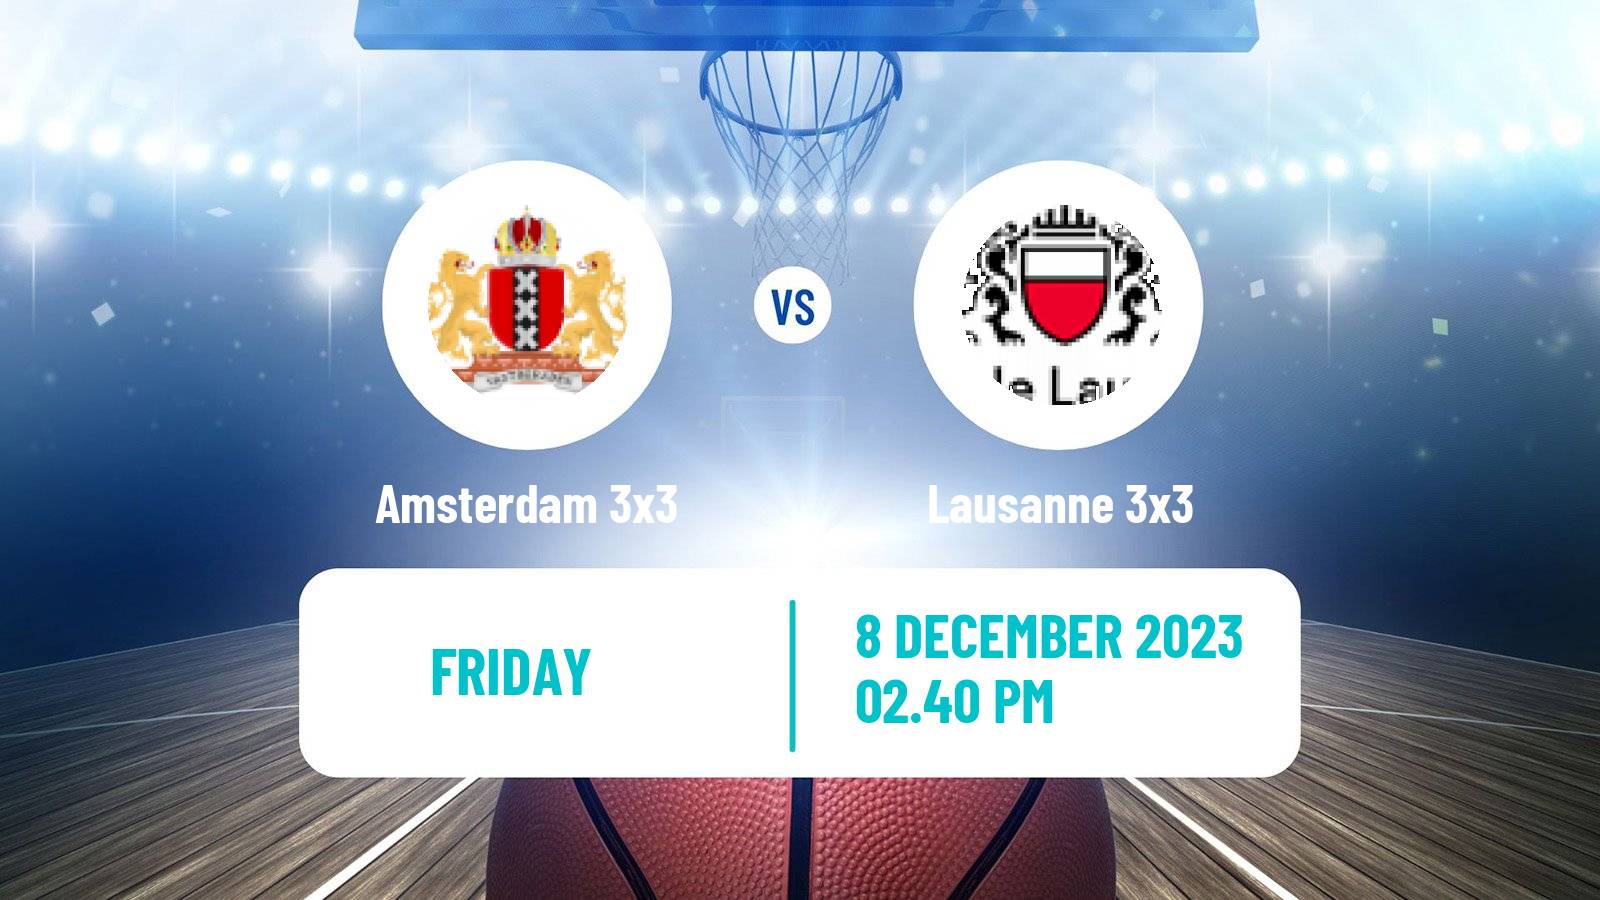 Basketball World Tour Final 3x3 Amsterdam 3x3 - Lausanne 3x3